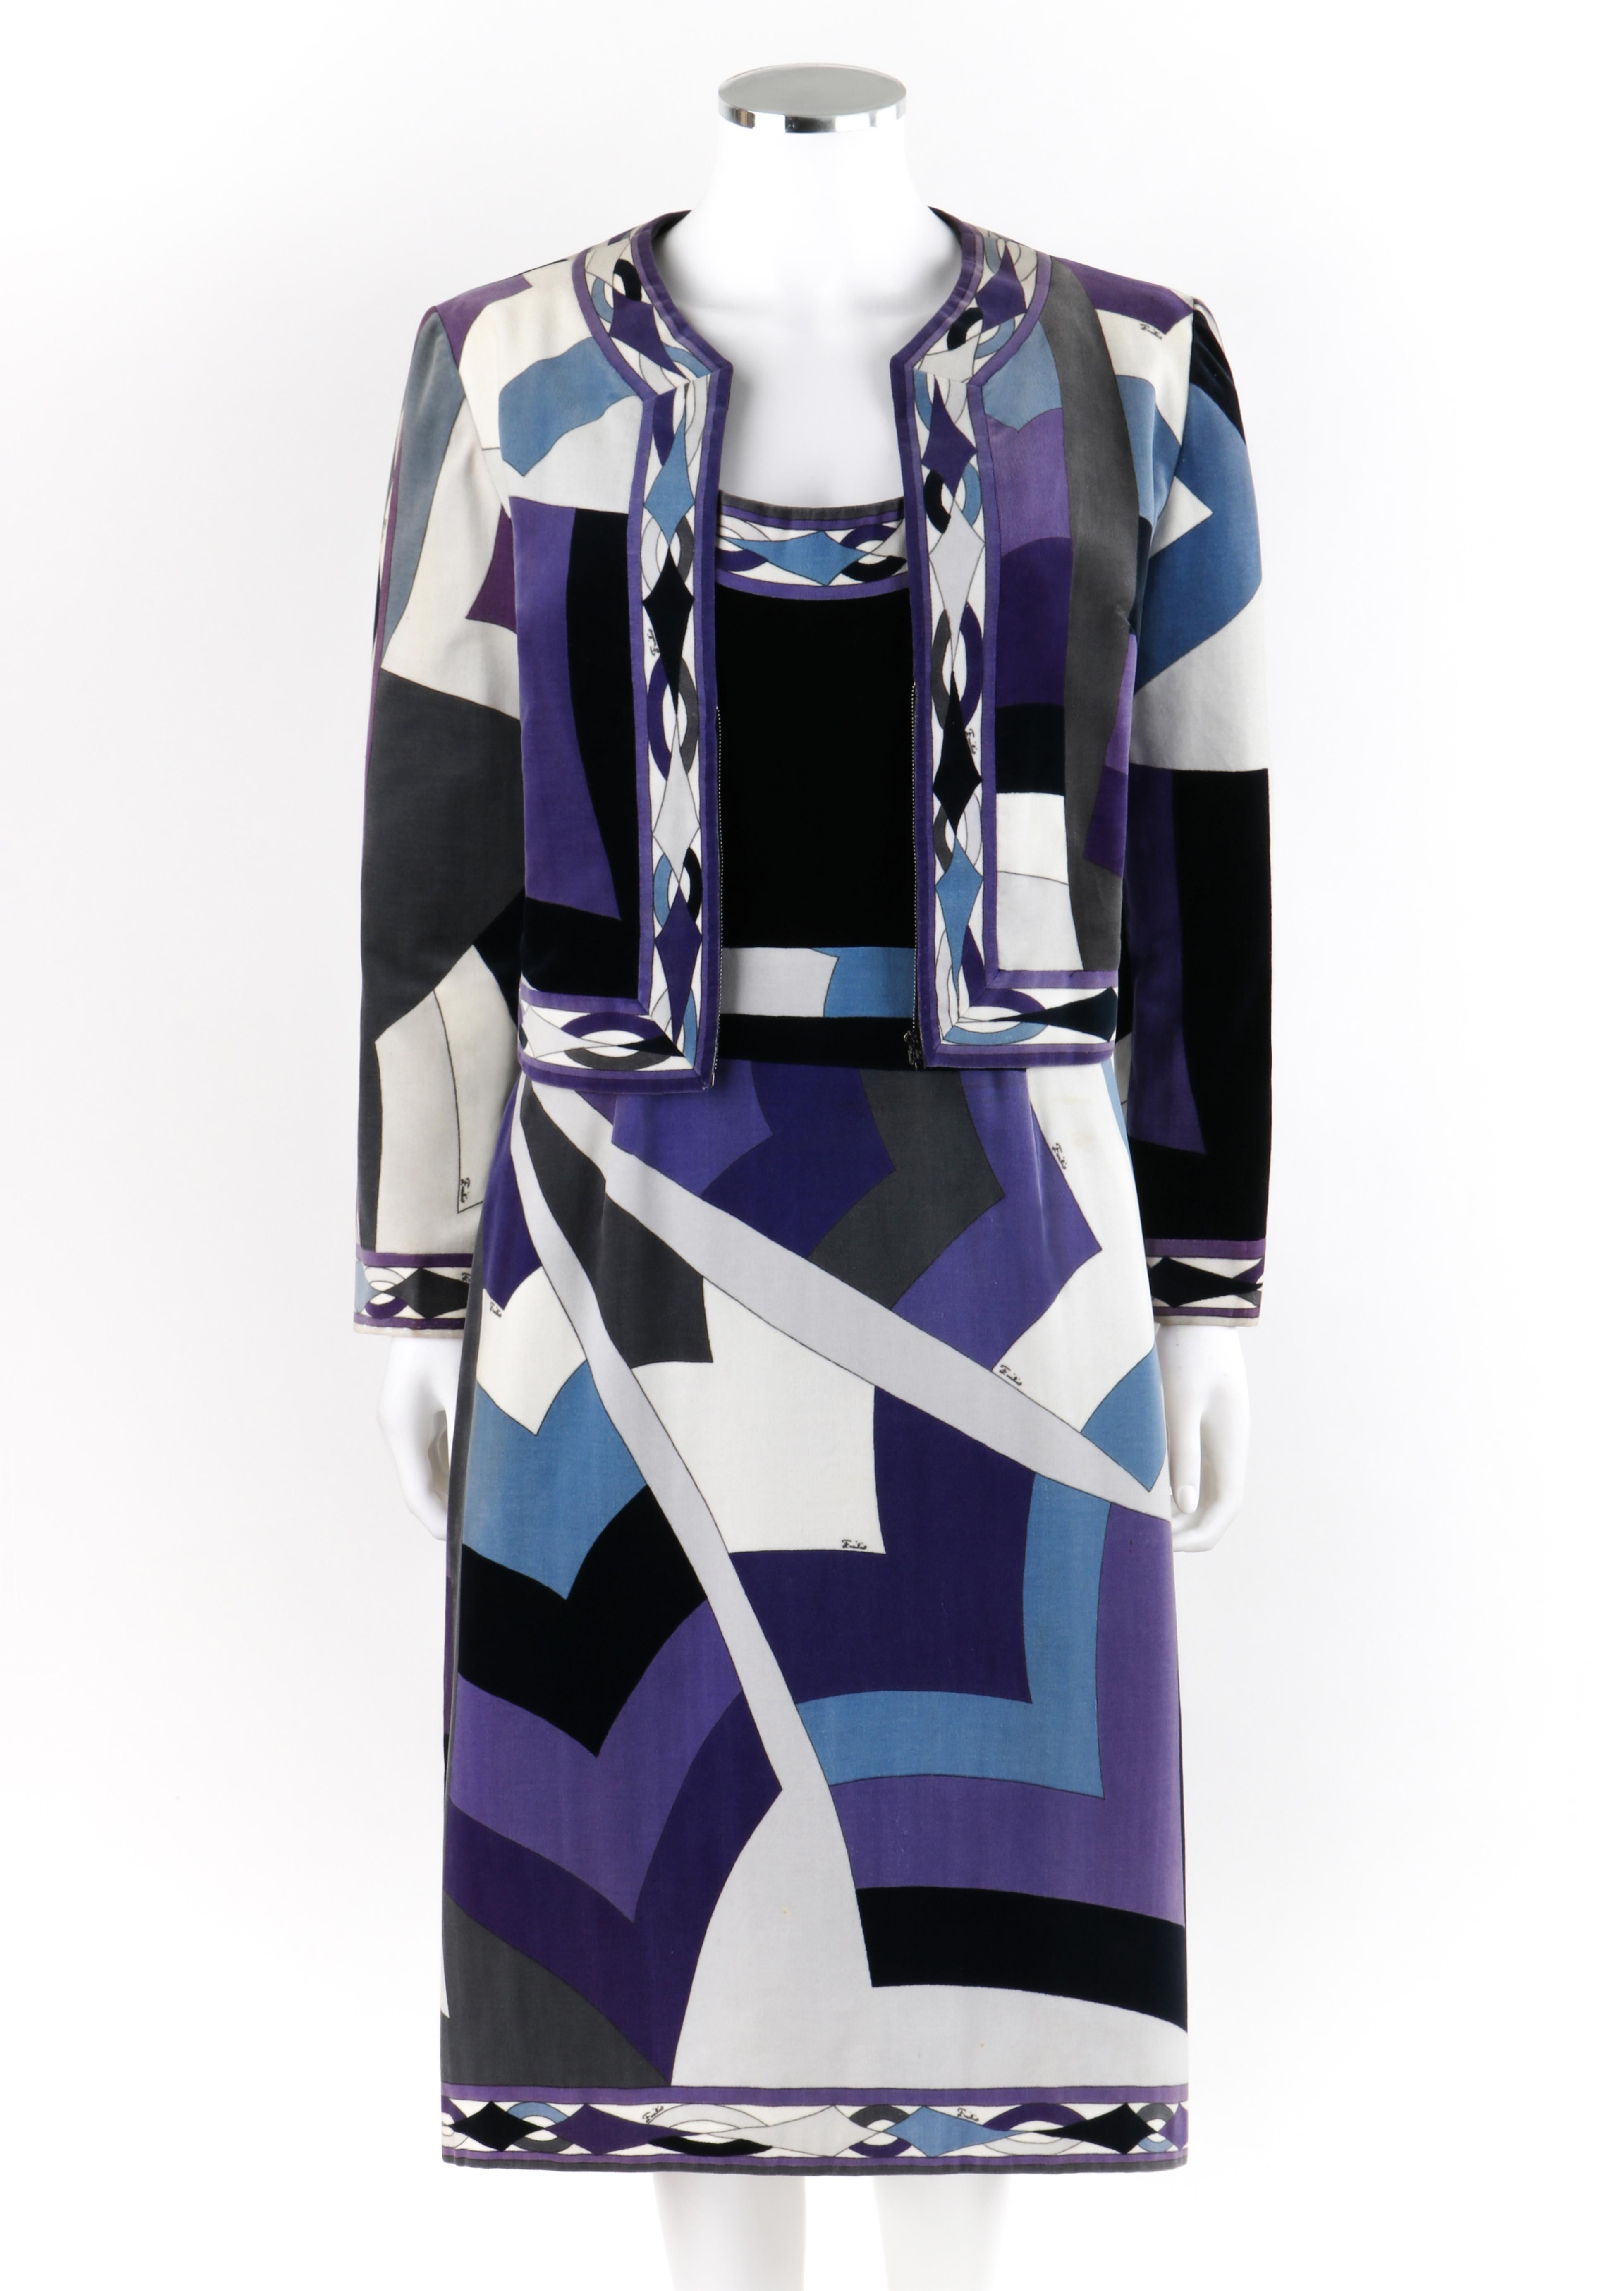 EMILIO PUCCI c.1960's 2pc Geometric Signature Print Velveteen Dress Suit Set
 
Circa: 1960’s
Label(s): Emilio Pucci; Exclusively for Saks Fifth Avenue
Designer: Emilio Pucci
Style: Dress suit set
Color(s): Shades of purple, blue, white, gray